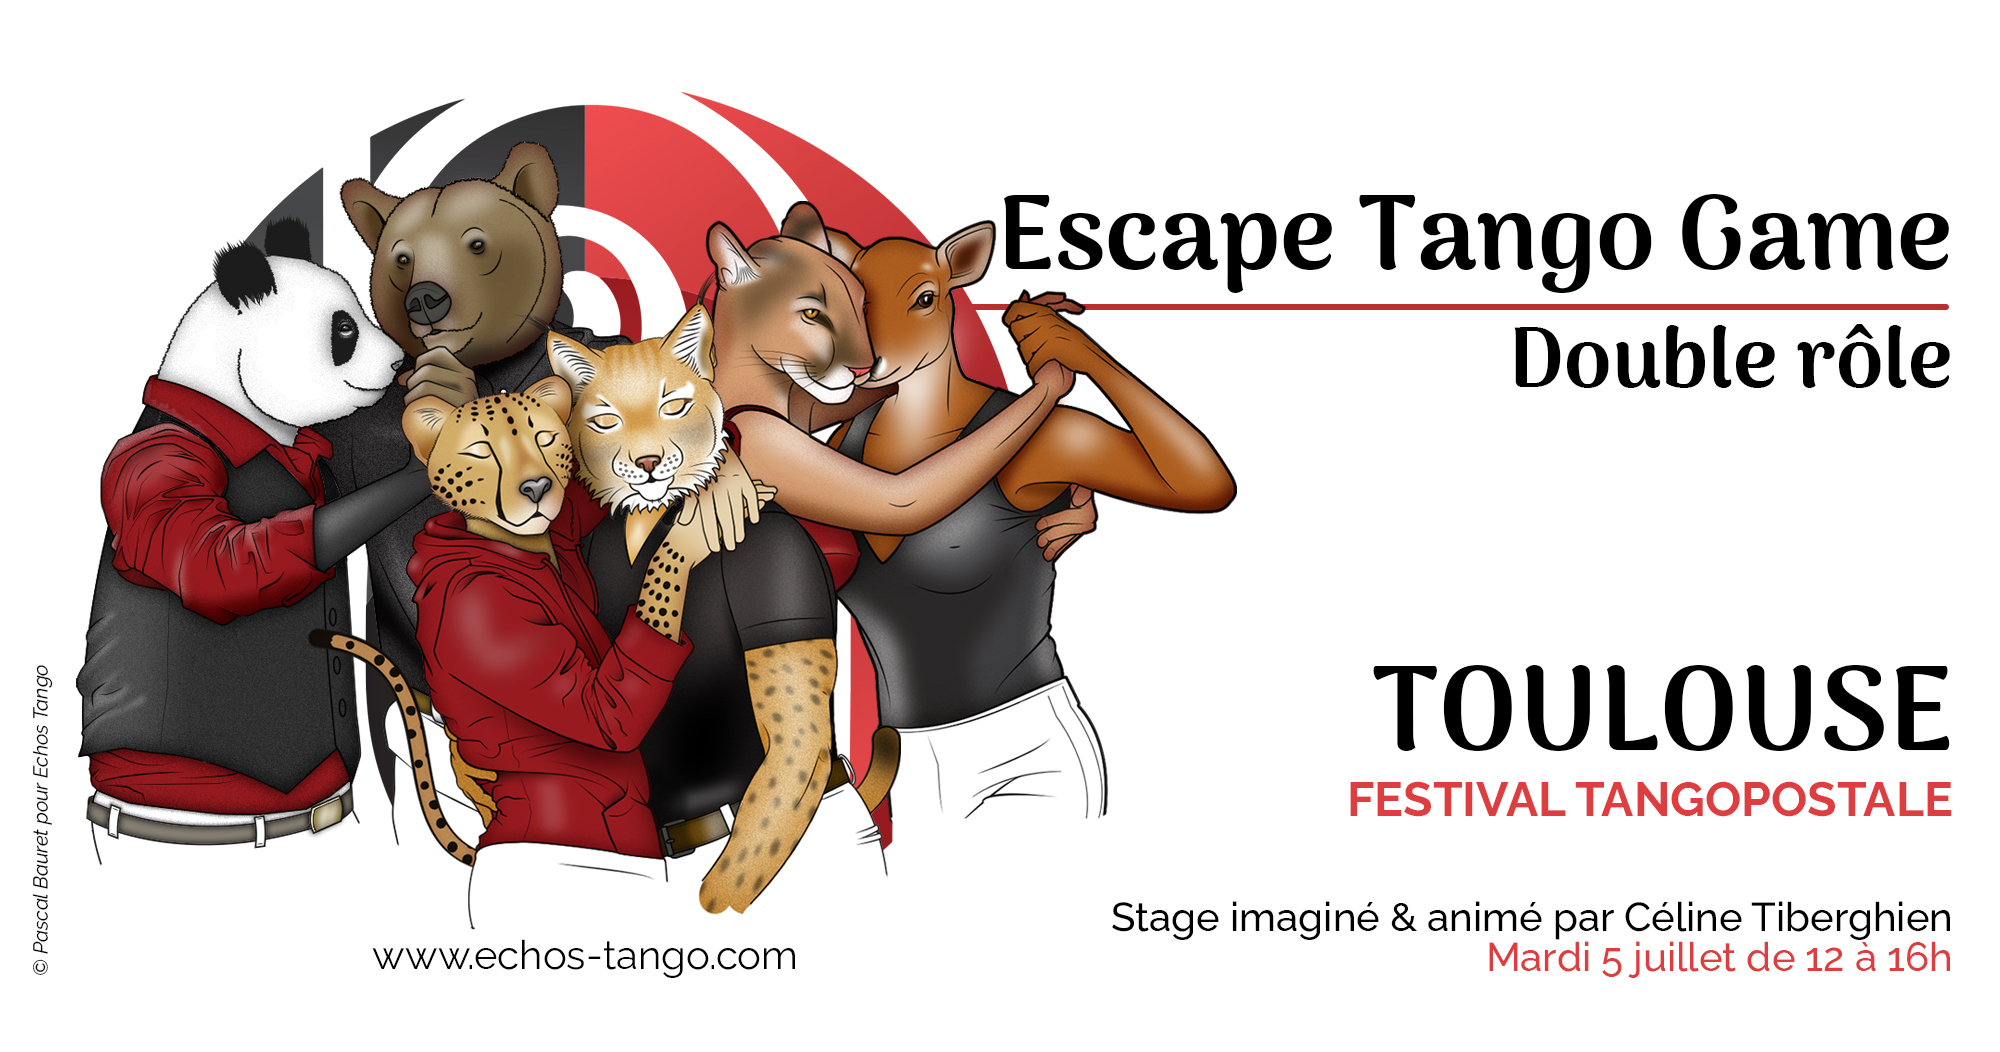 ESCAPE TANGO GAME AU FESTIVAL TANGOPOSTALE !